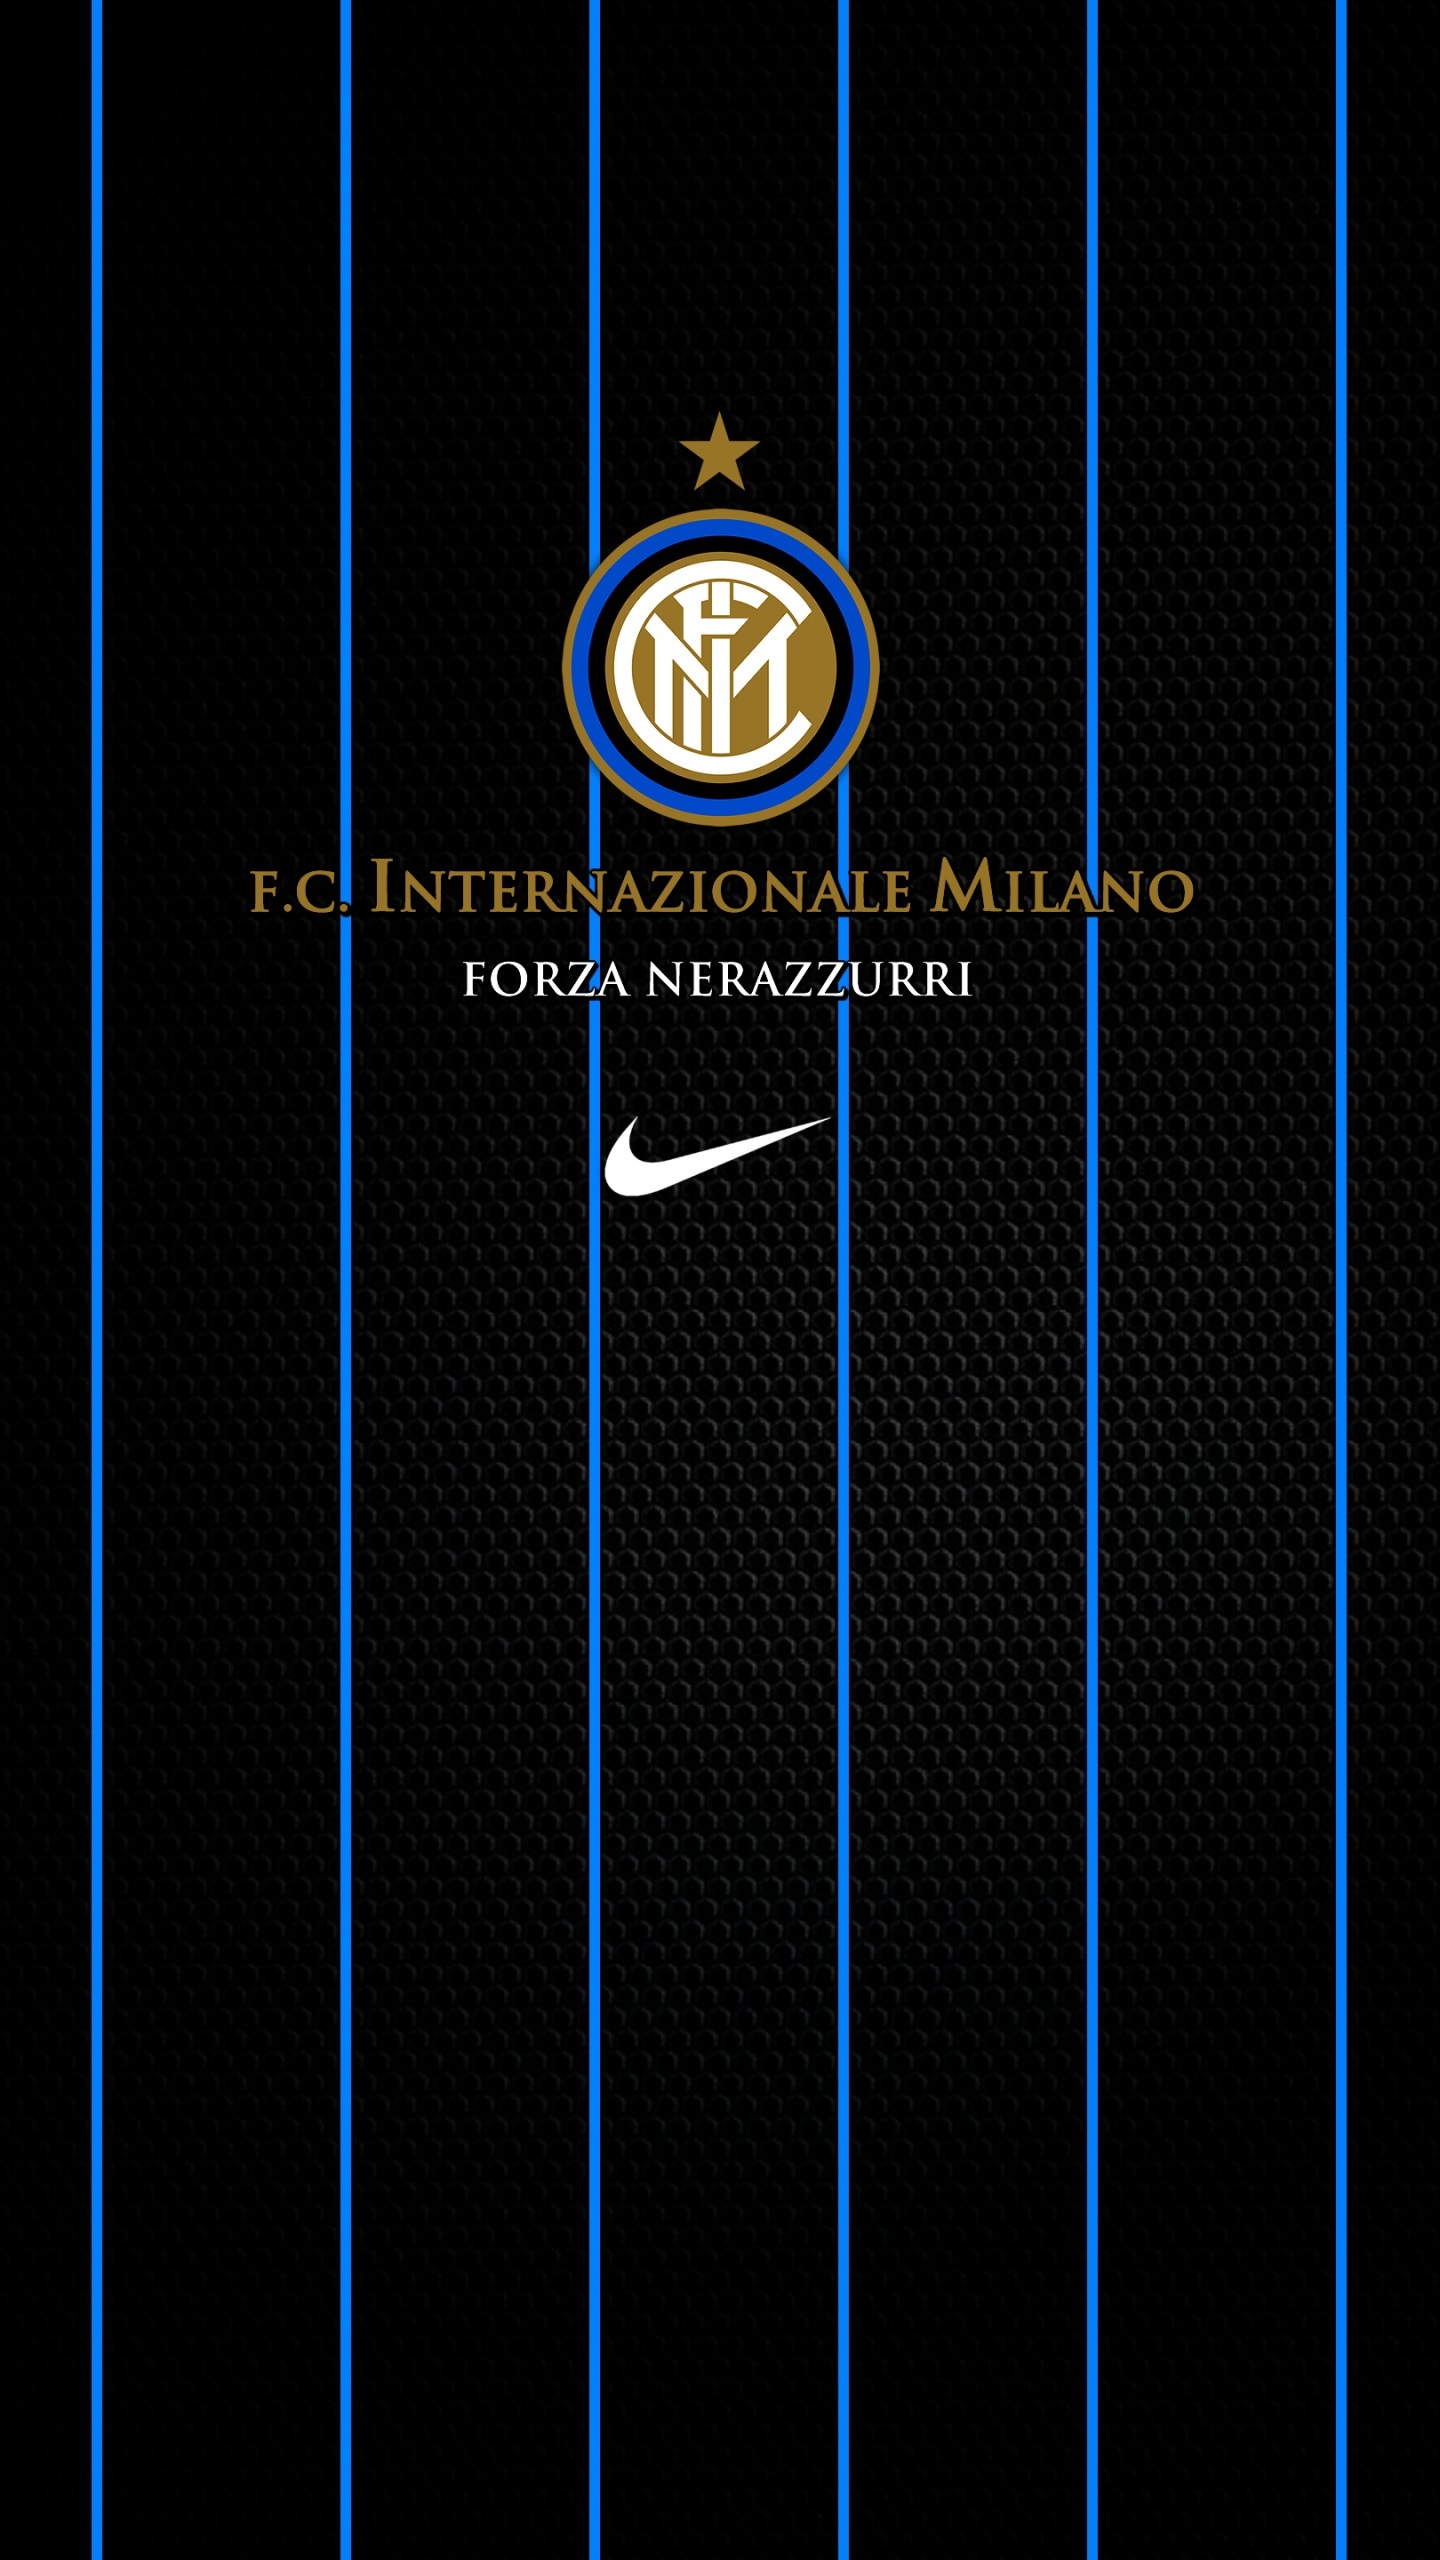 Fc Internazionale Milano Smartphone Wallpaper BygoloteHD Ddcd